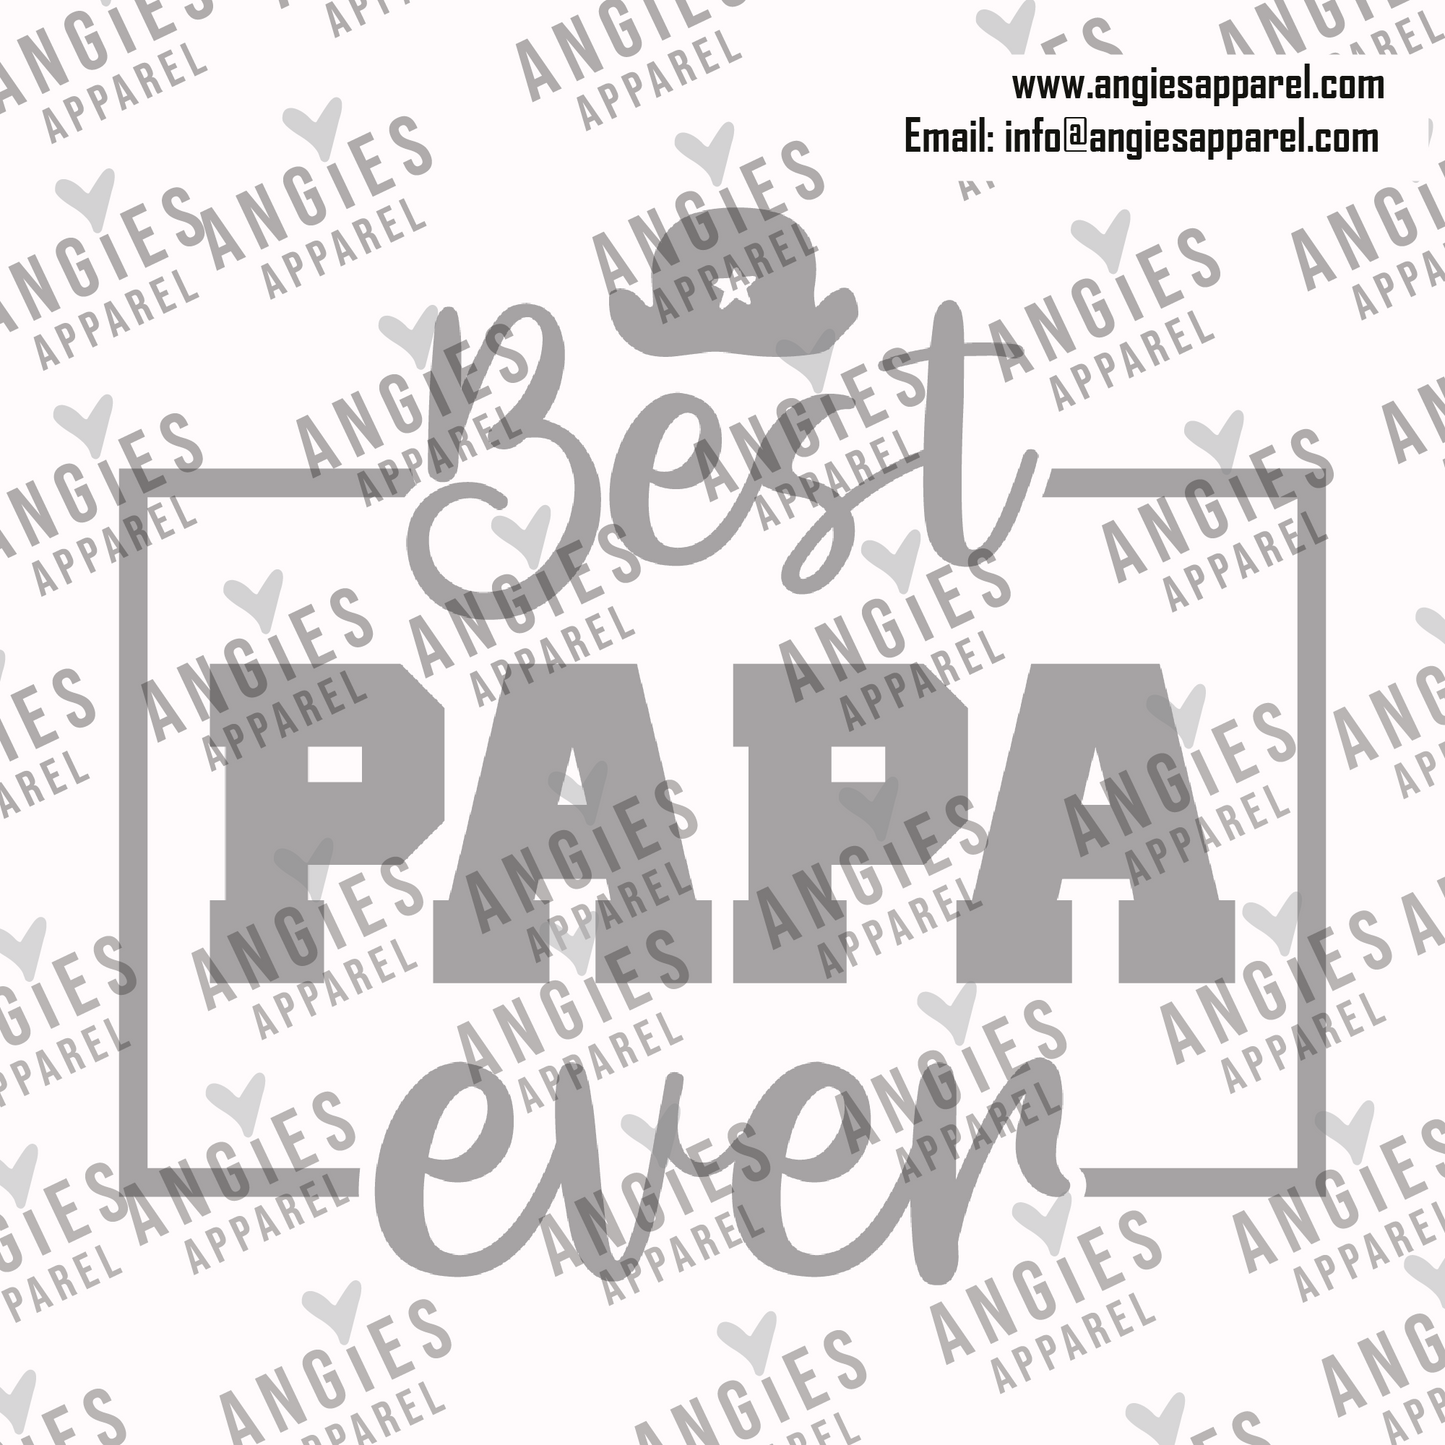 50. Best Papa Ever 01